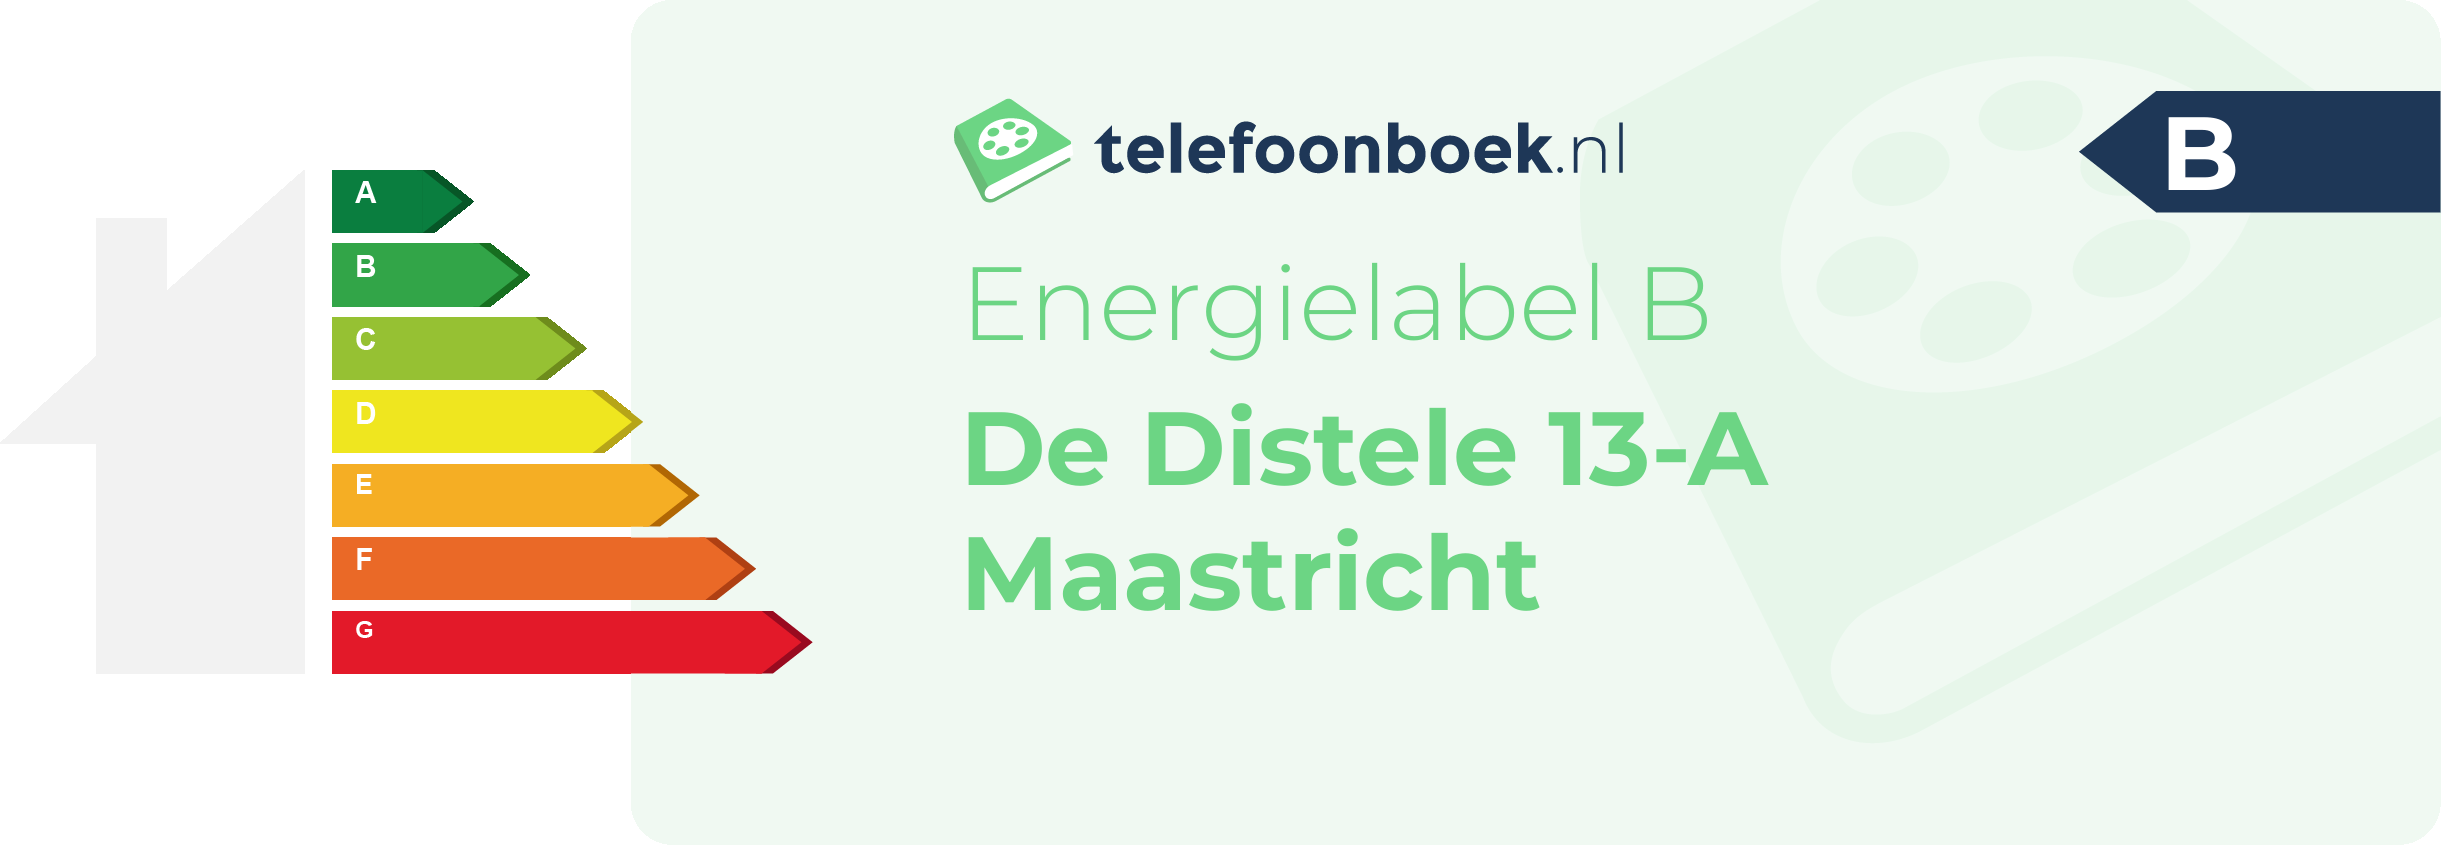 Energielabel De Distele 13-A Maastricht